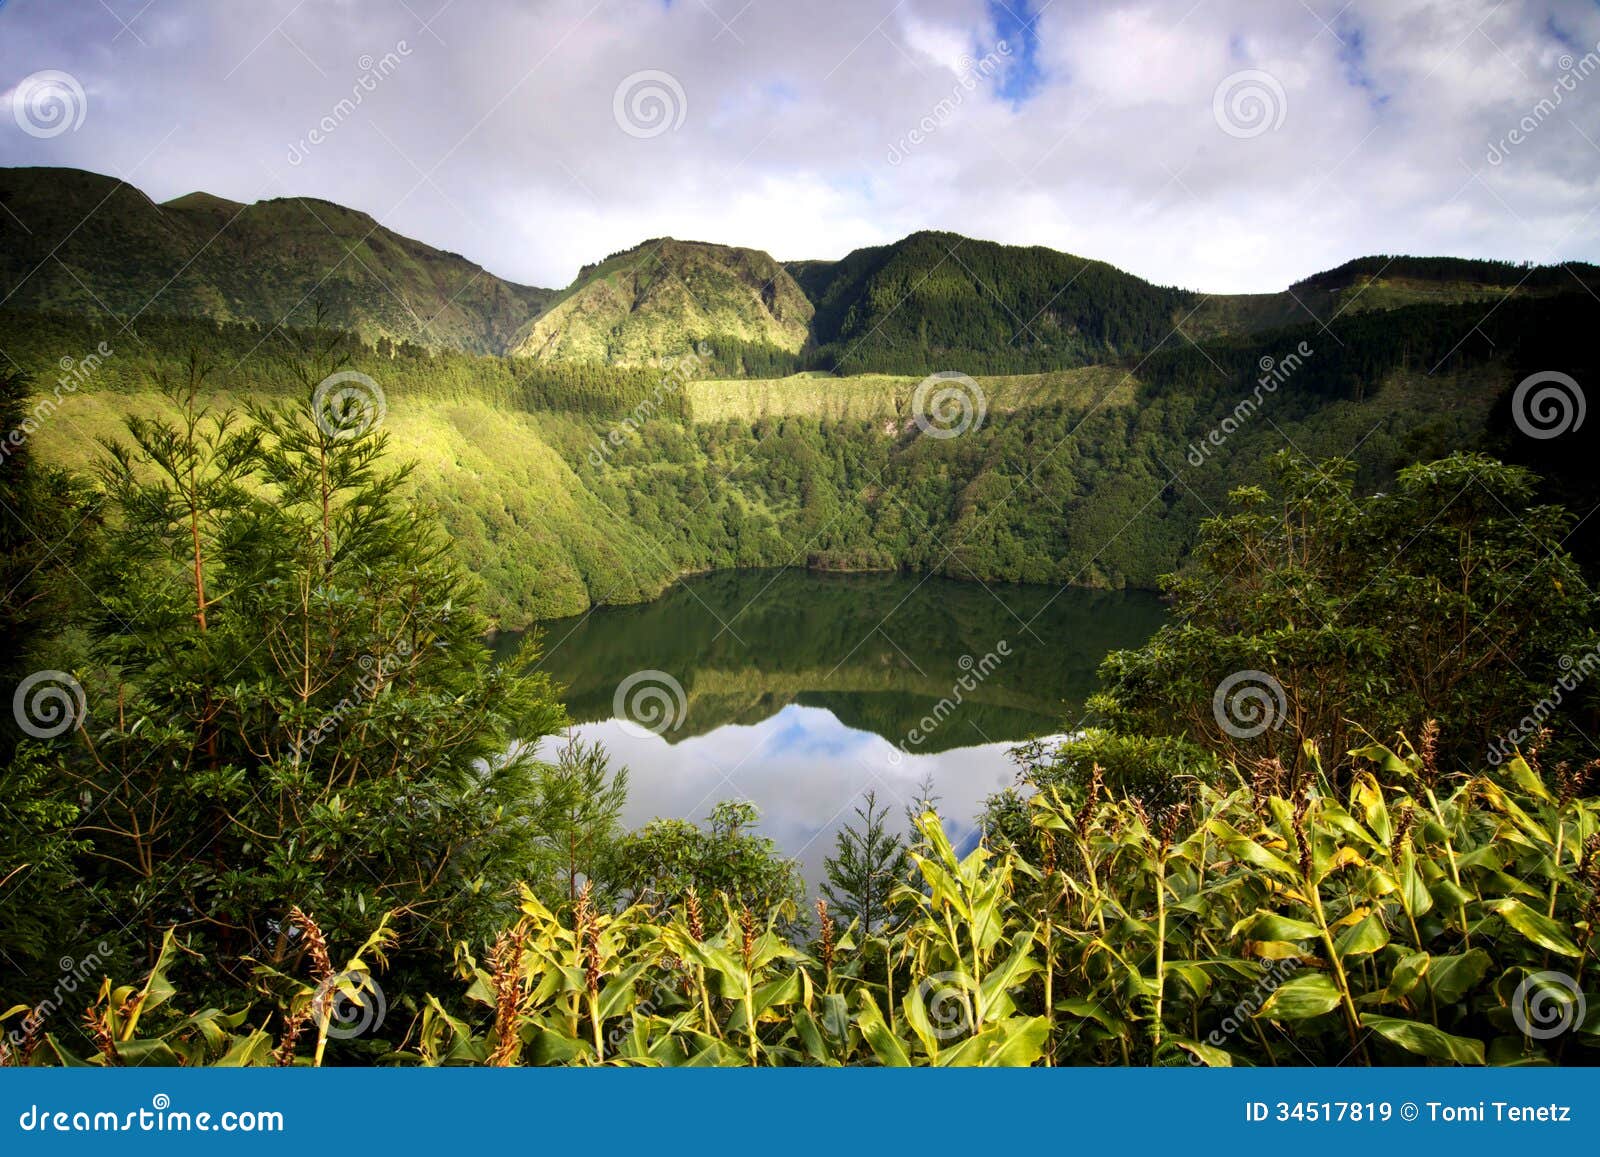 azores: green island